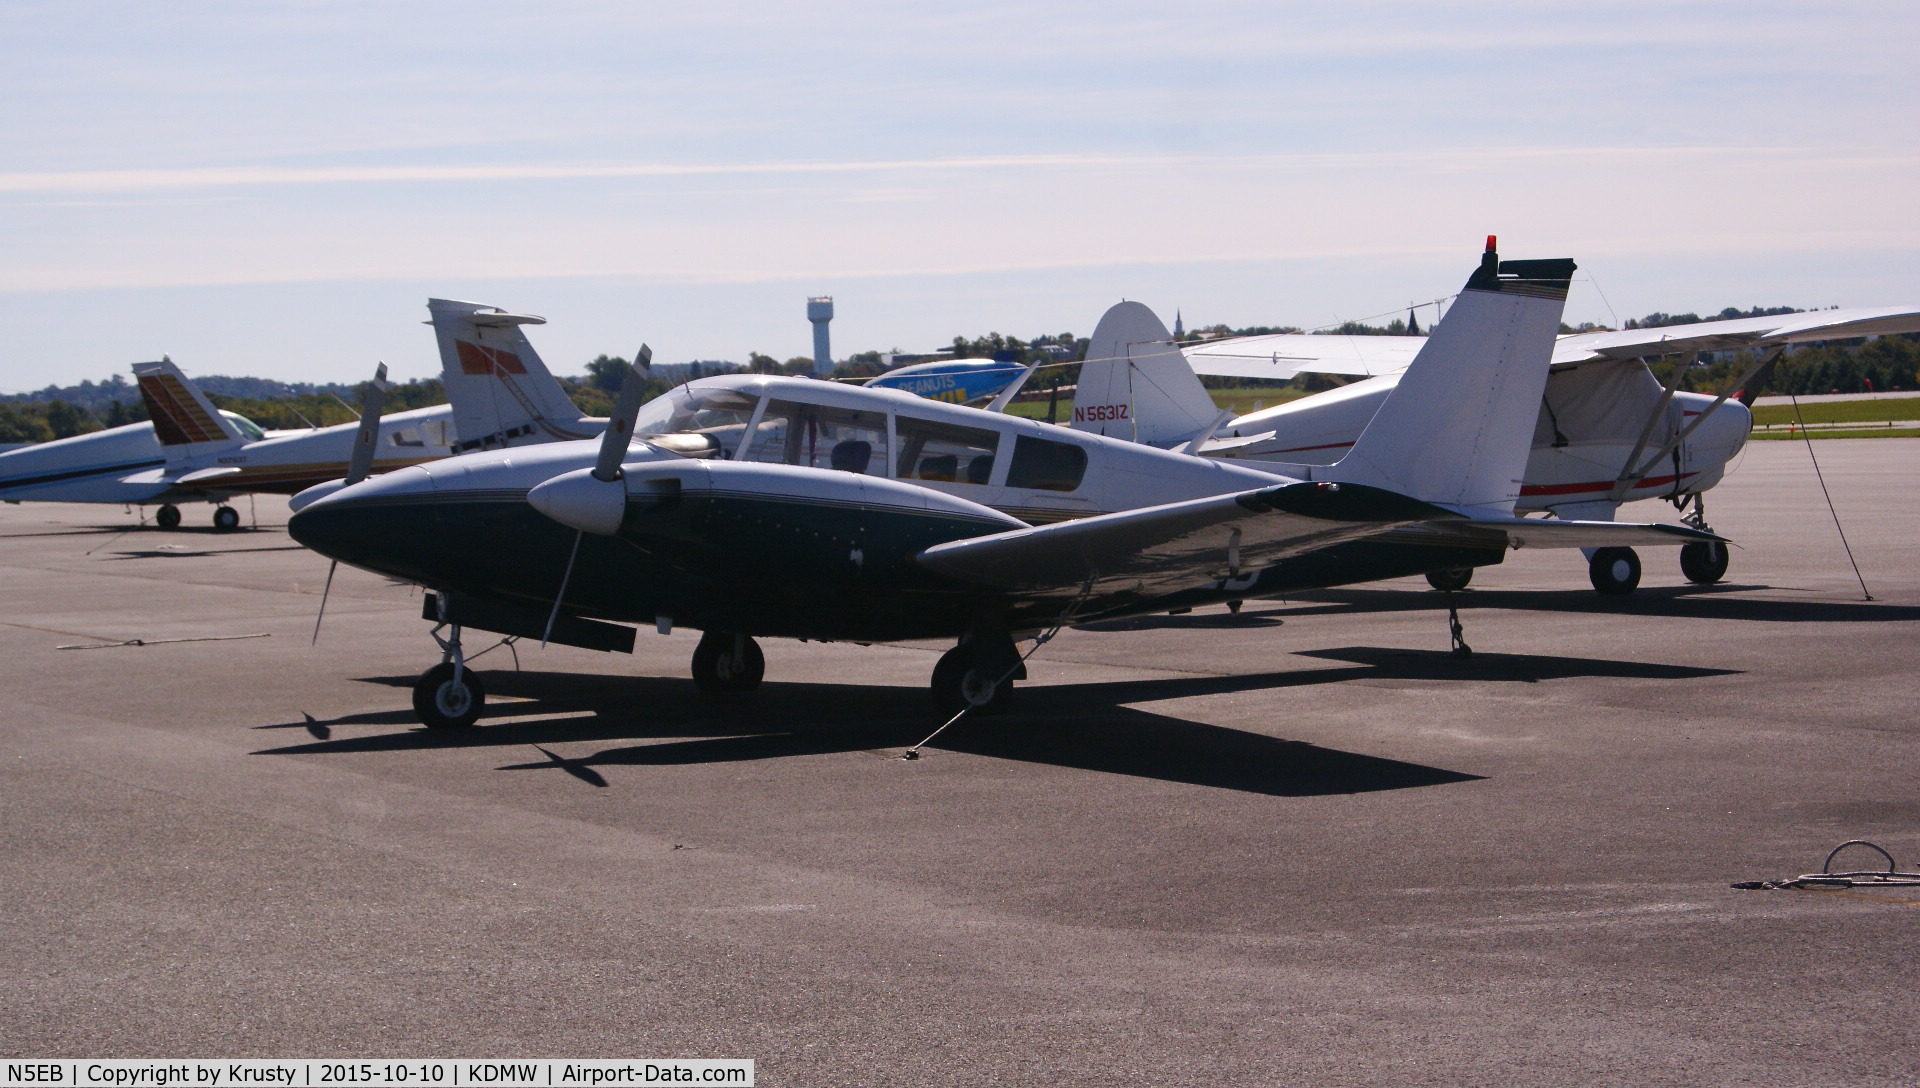 N5EB, 1967 Piper PA-30-160 B Twin Comanche C/N 30-1474, parked